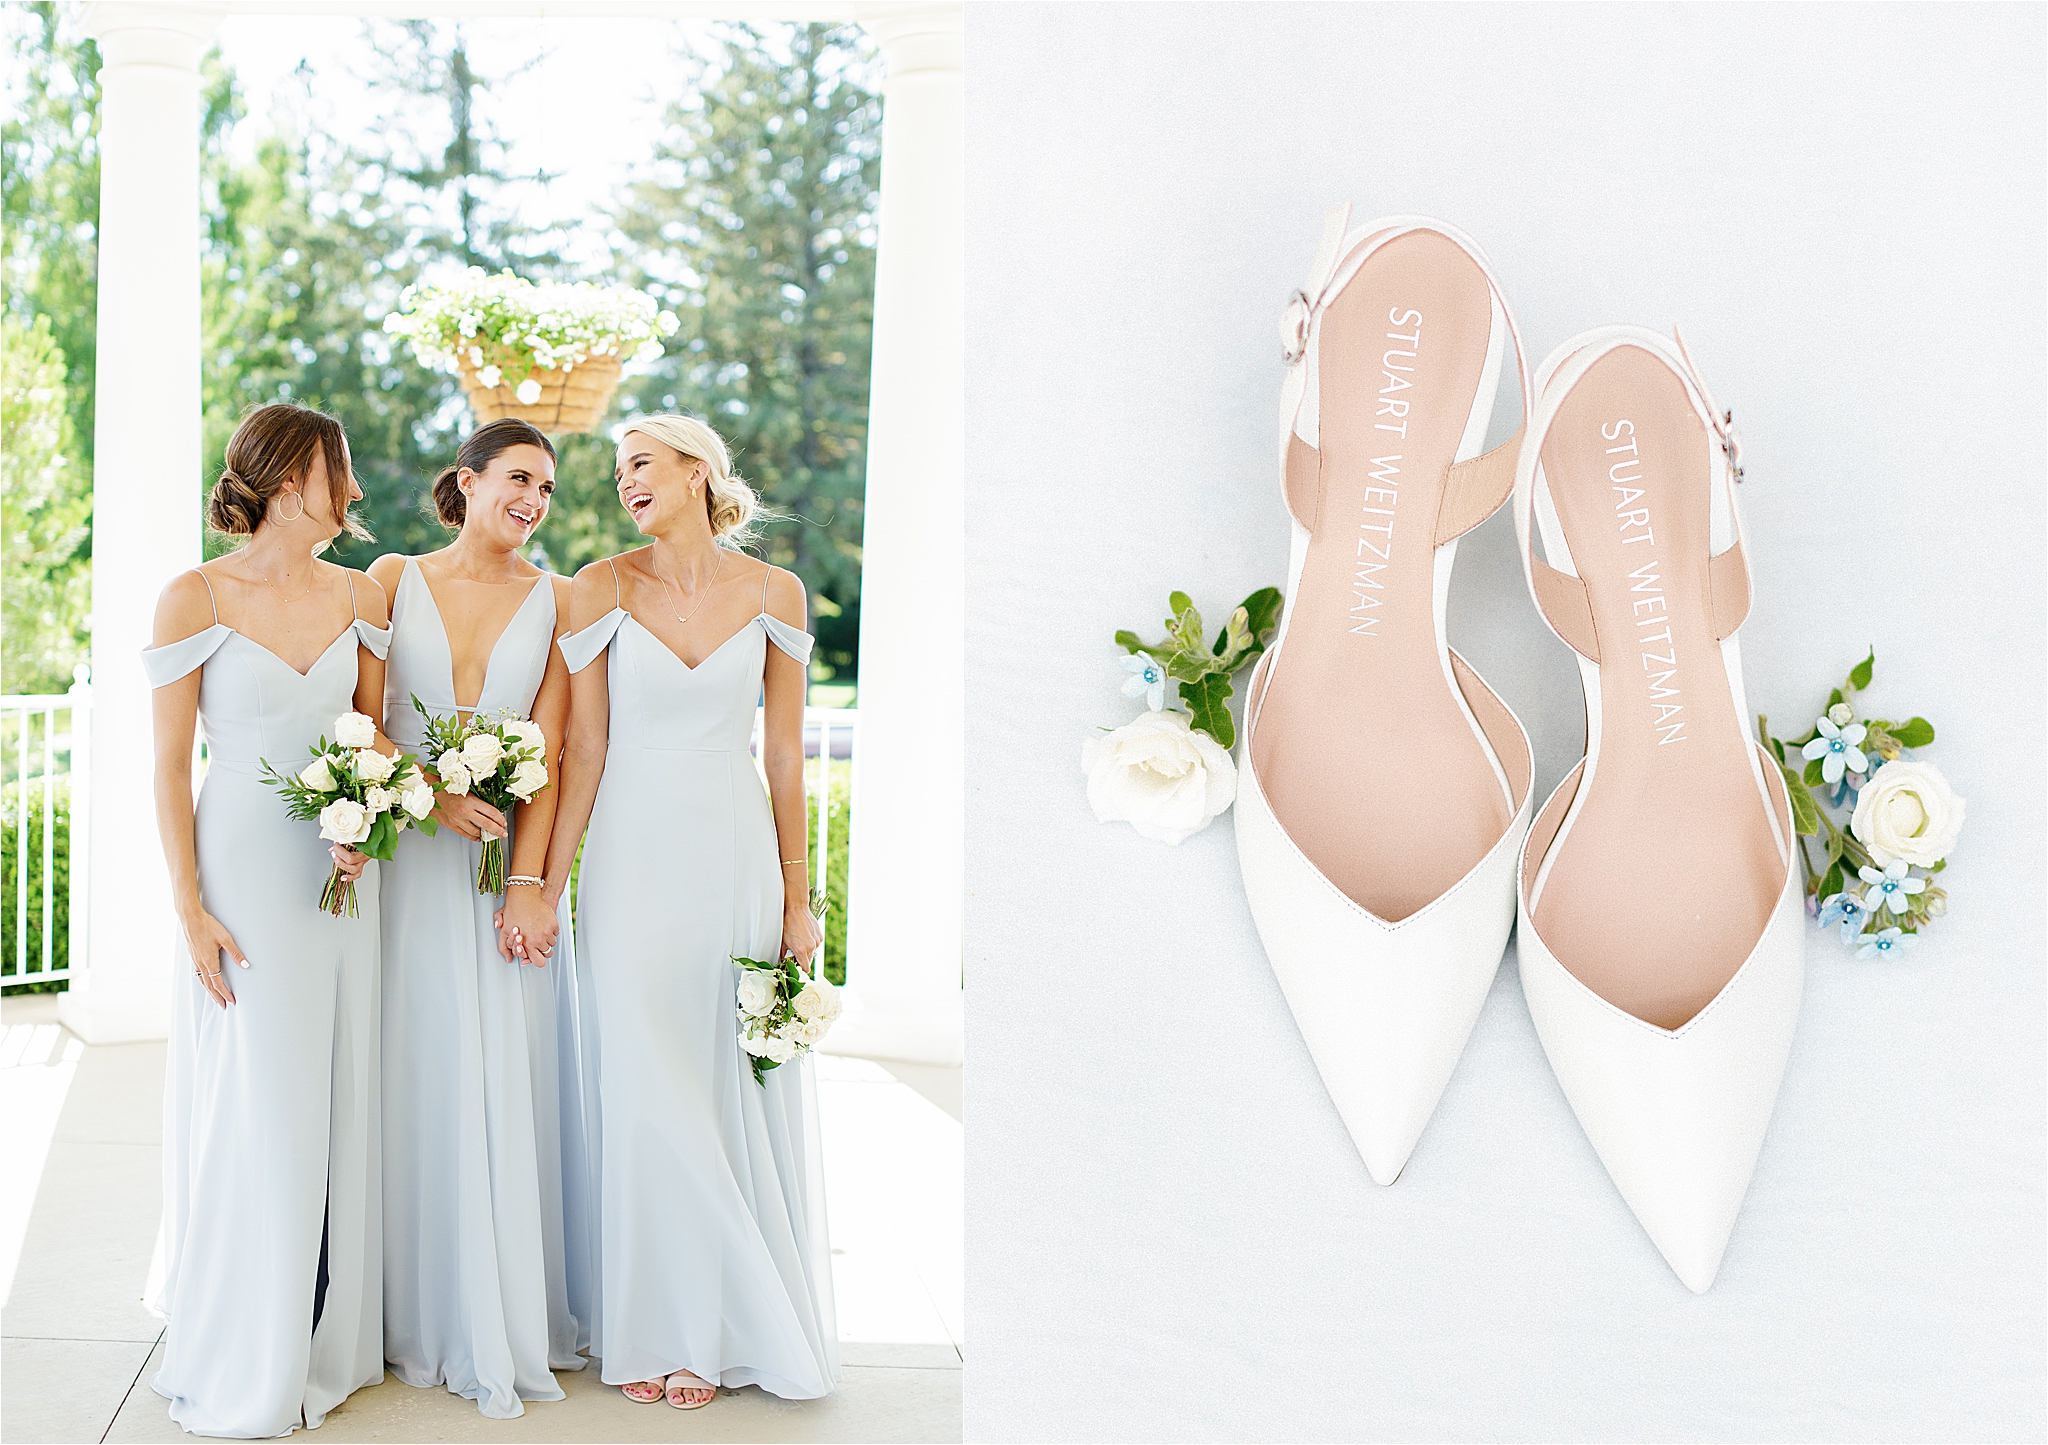 Stuart Weitzman bridal shoes and Jenny Yoo light blue bridesmaid dresses